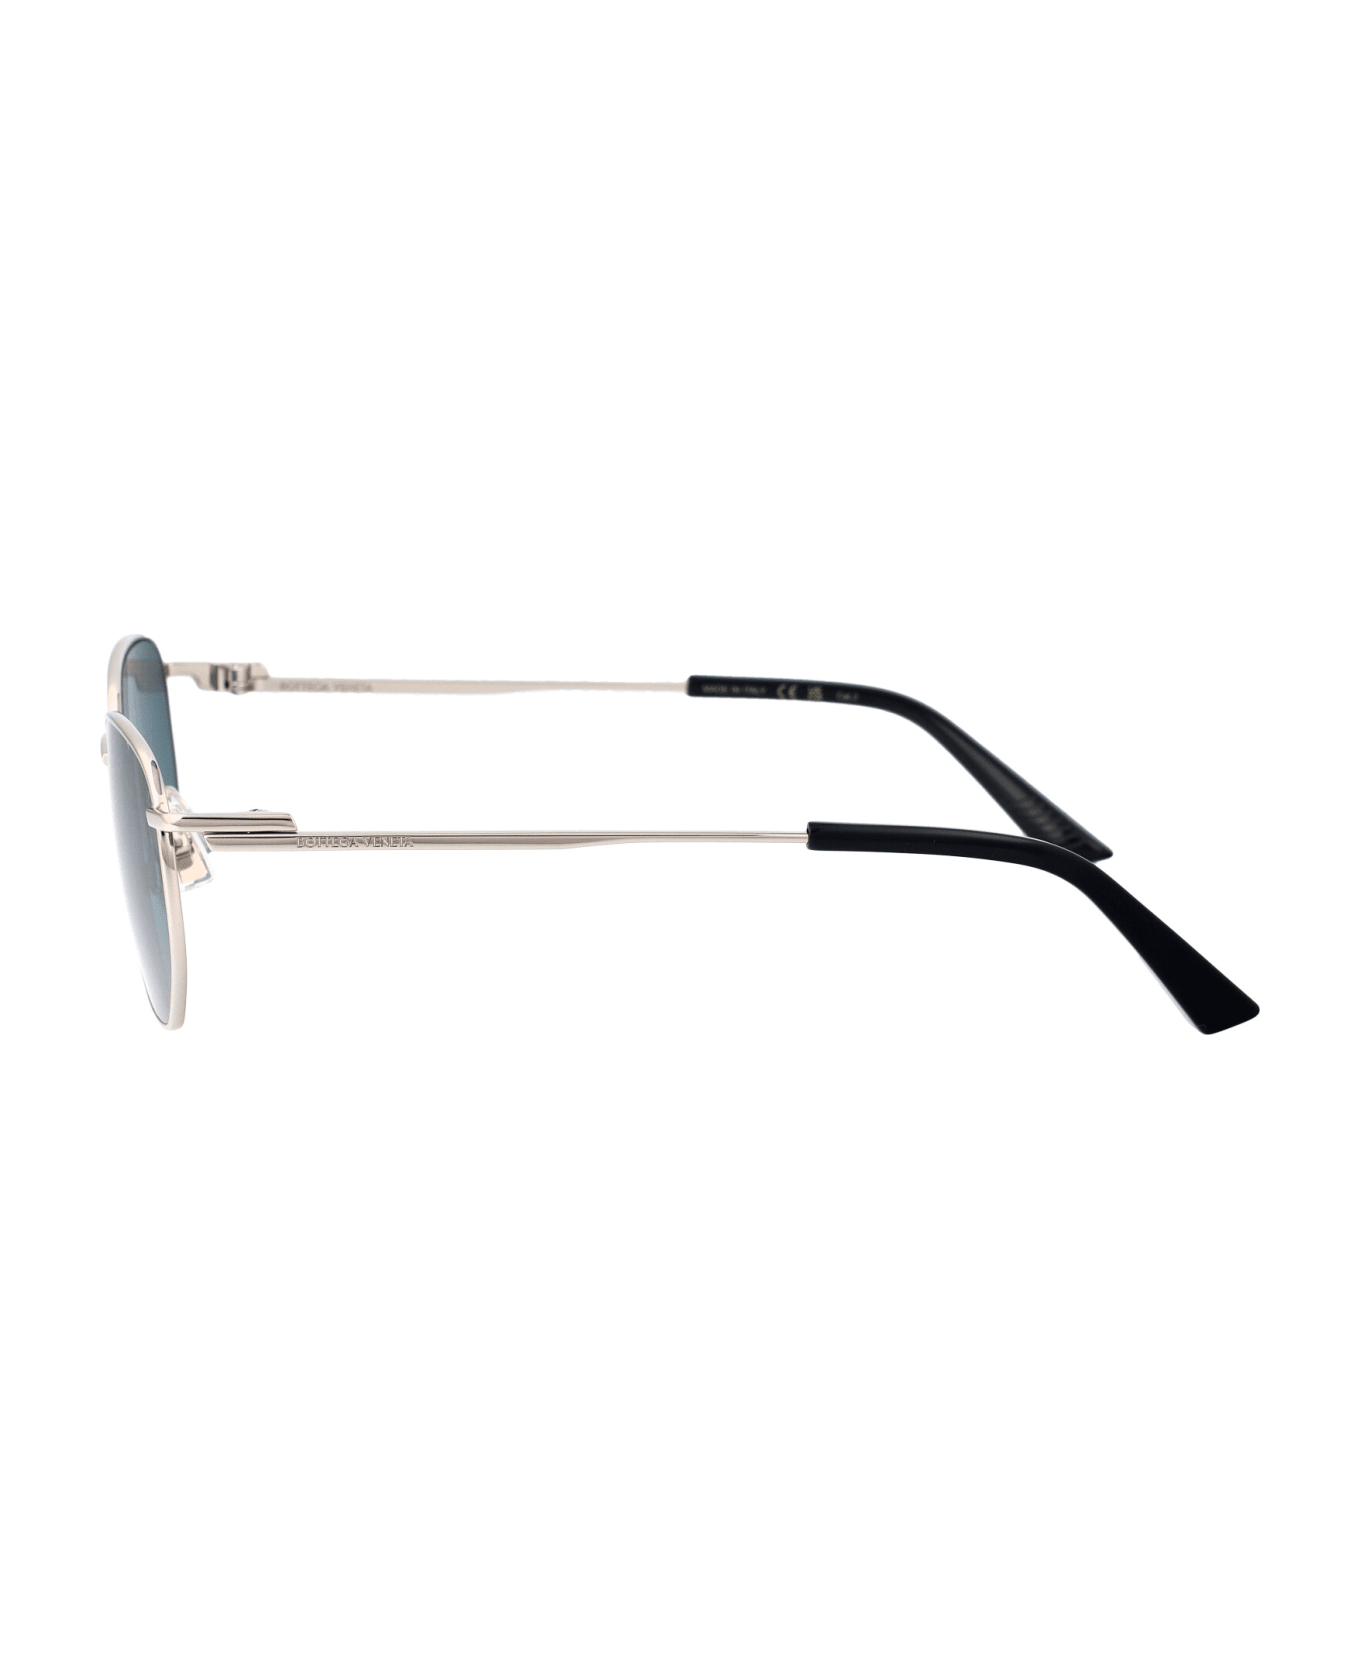 Bottega Veneta Eyewear Bv1301s Sunglasses - 004 SILVER SILVER GREEN